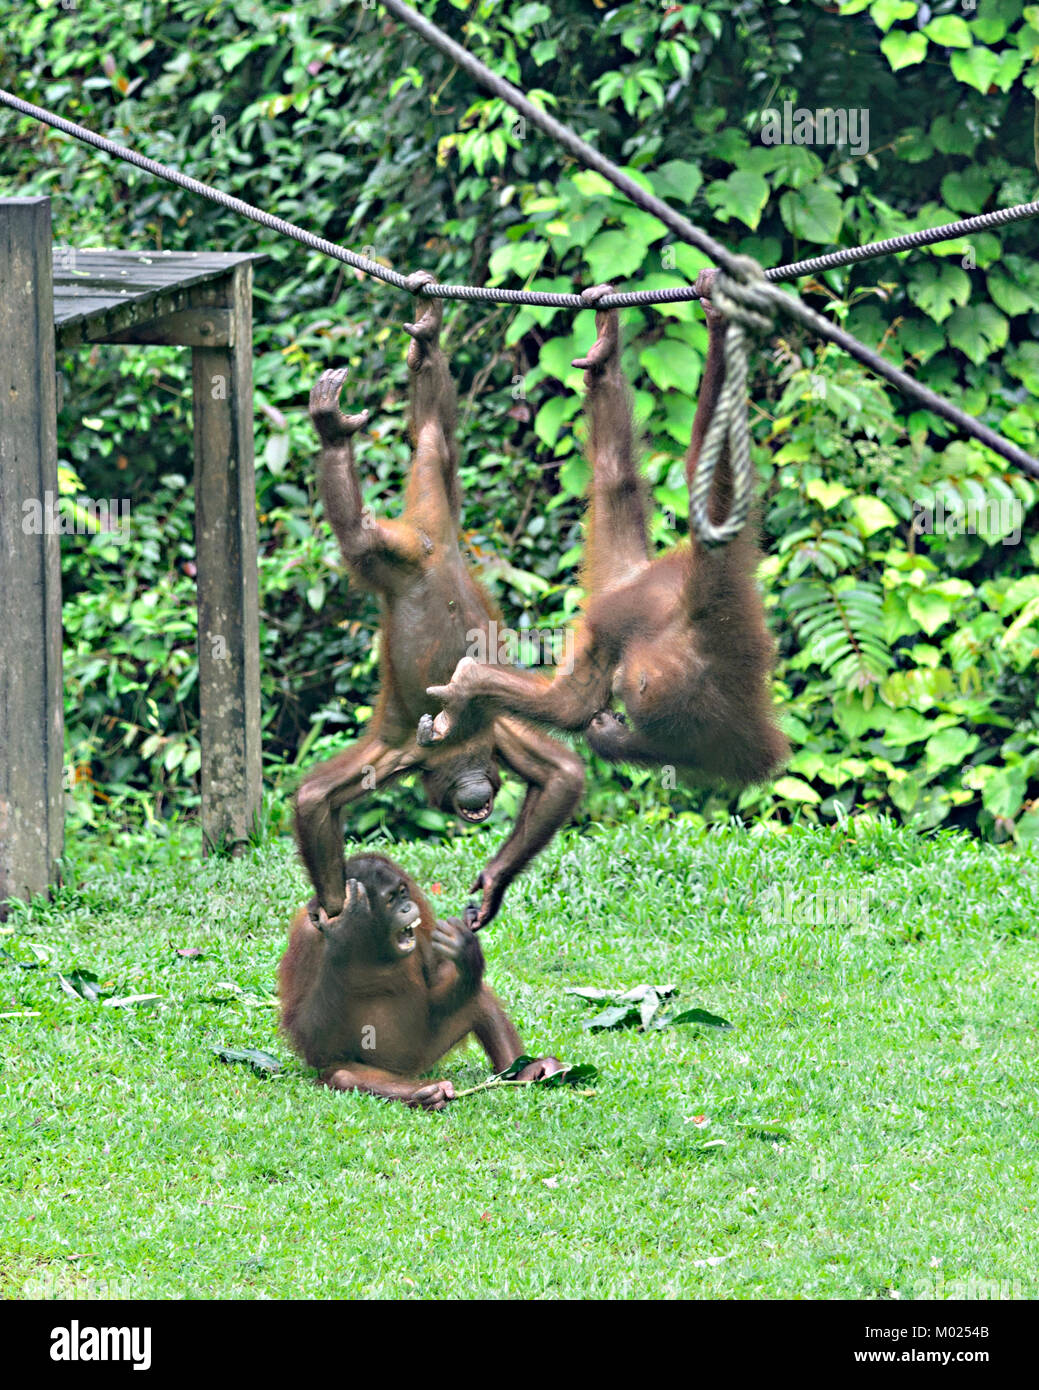 Young Orangutans playing in the nursery, Sepilok Orangutan Rehabilitation Centre, Borneo, Sabah, Malaysia Stock Photo